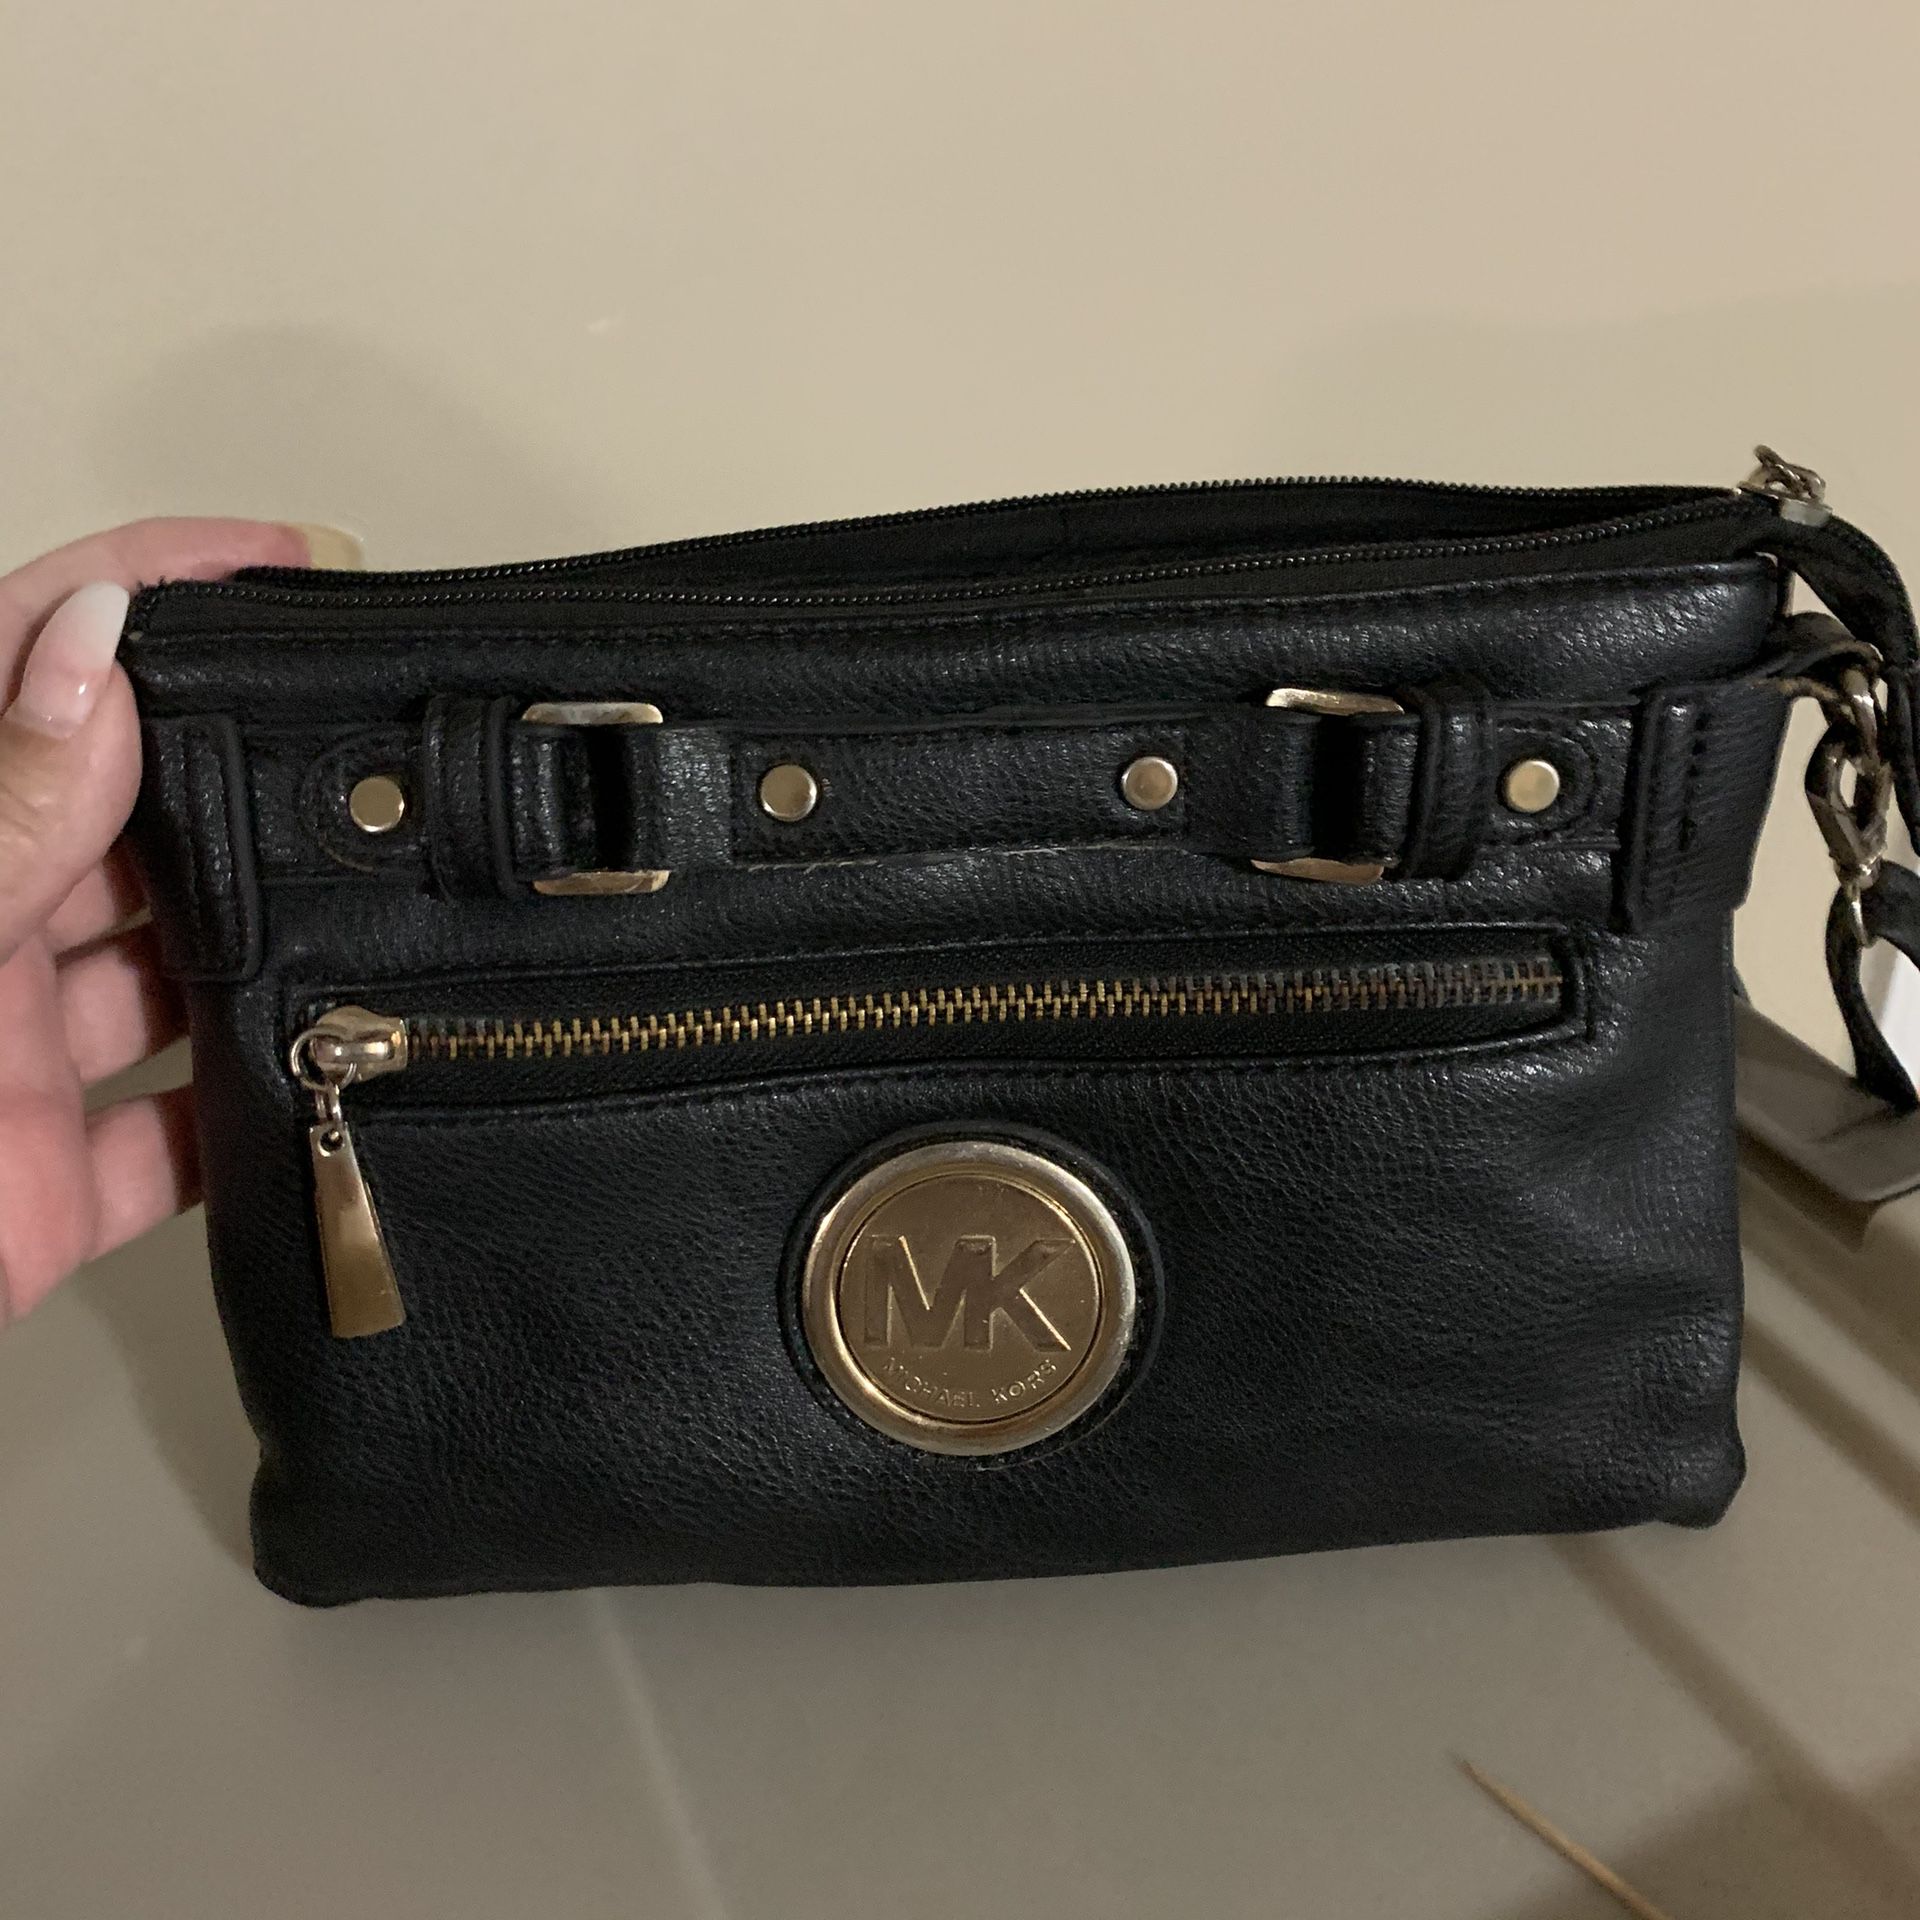 Crossbody Michael Kors black small purse